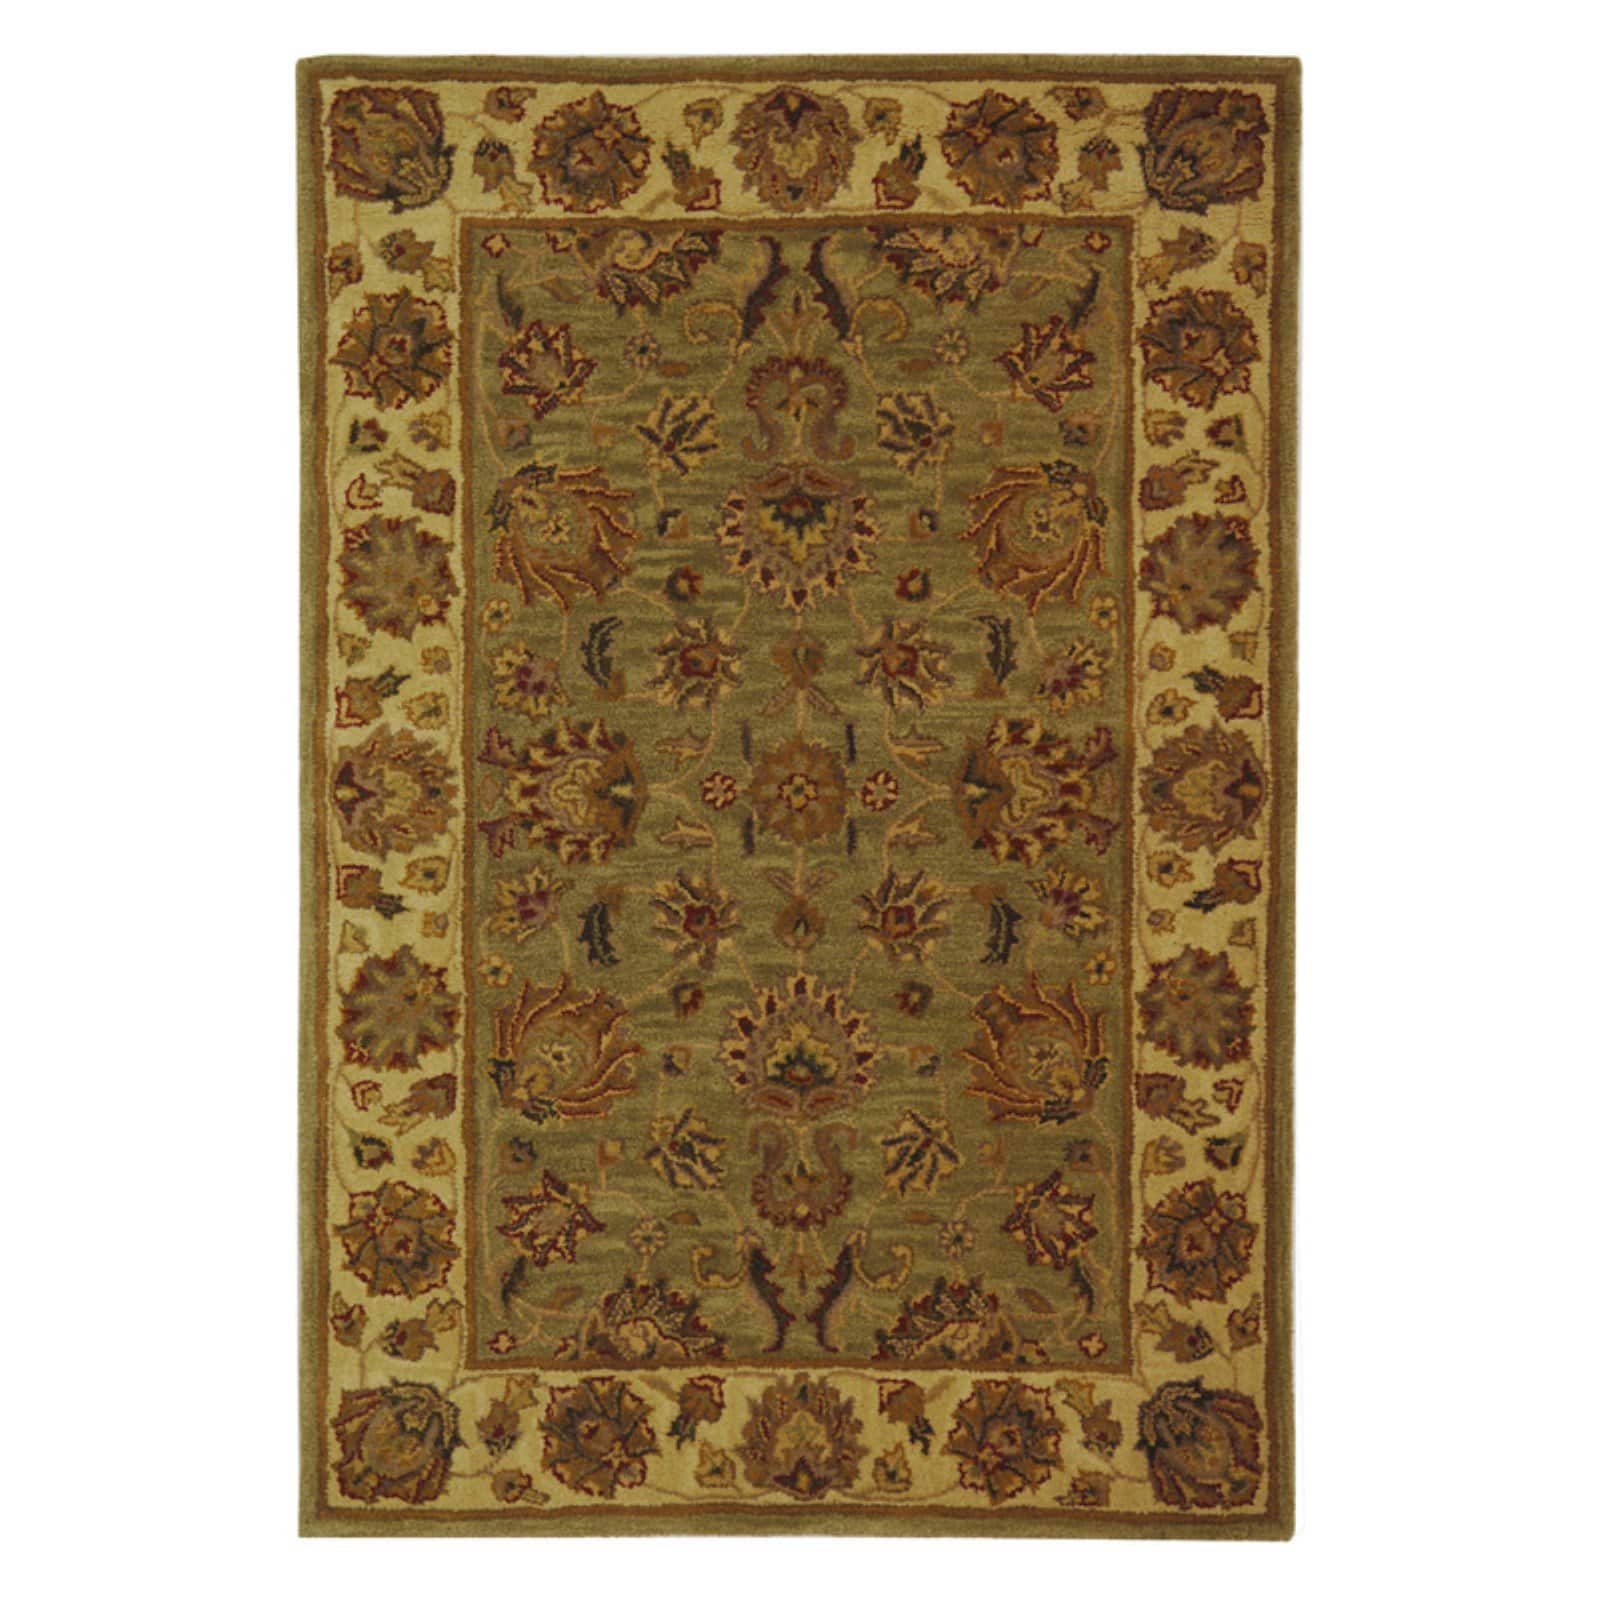 SAFAVIEH Heritage Regis Traditional Wool Area Rug, Green/Gold, 4' x 6' - image 5 of 10